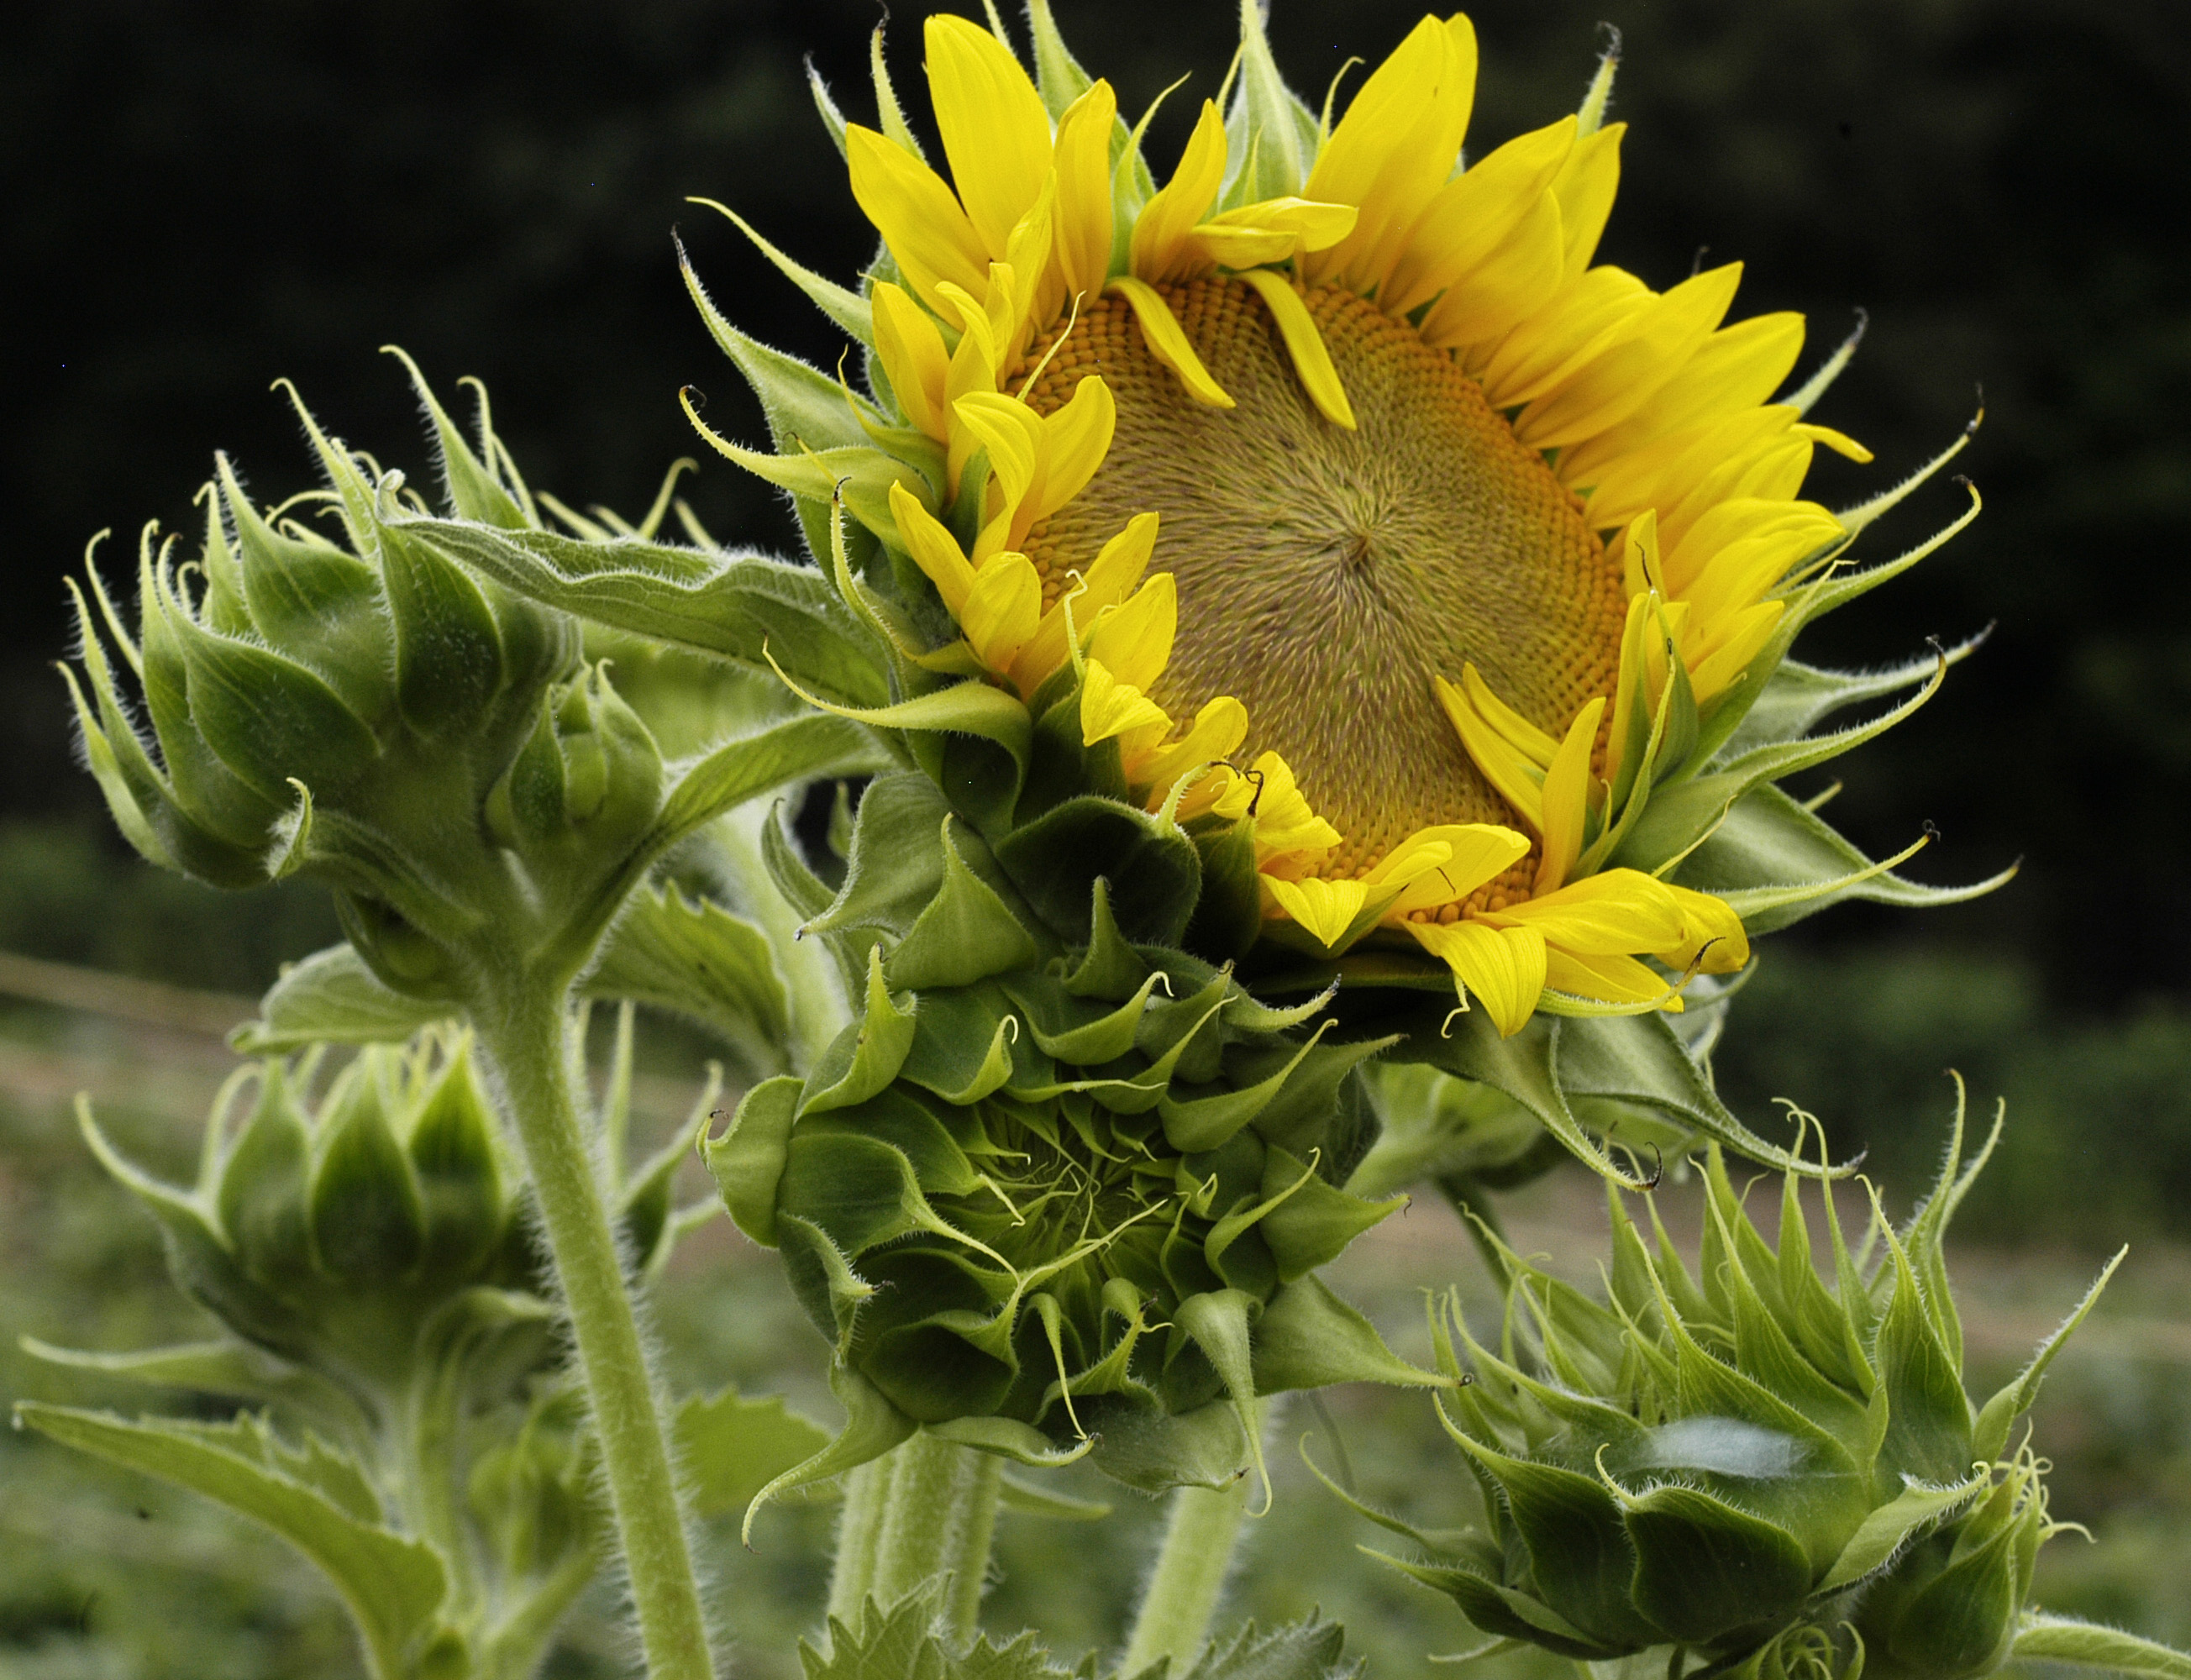 Peredovik (oil seed) Sunflower, 4 g : Southern Exposure Seed ...